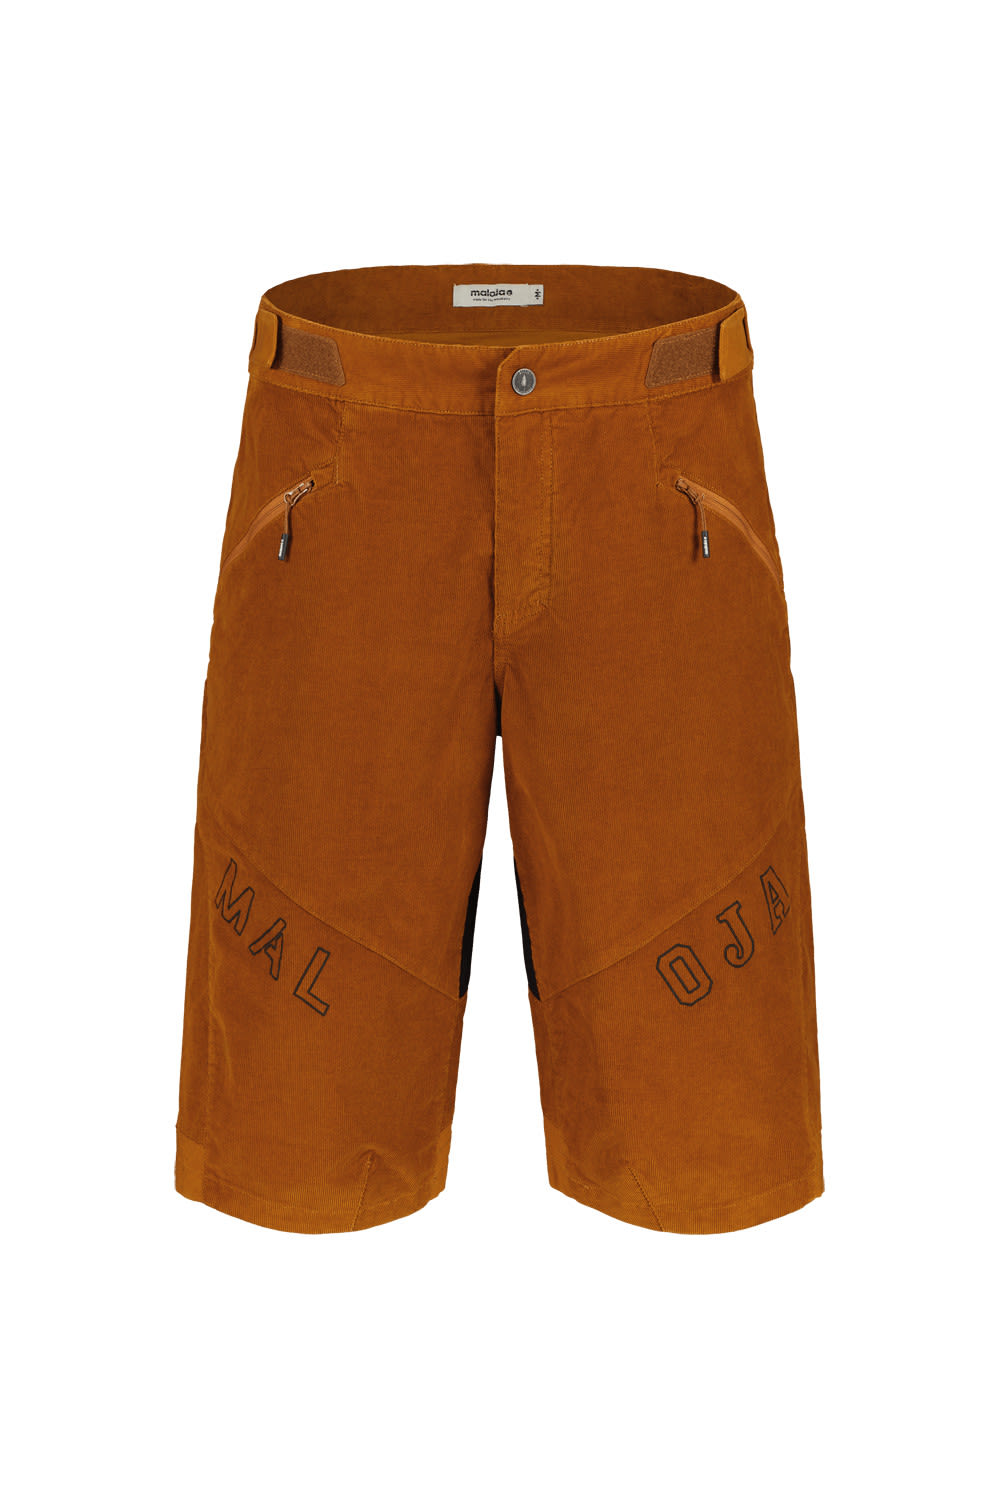 Maloja M Aualm. Shorts Orange | Herren Fahrrad Shorts